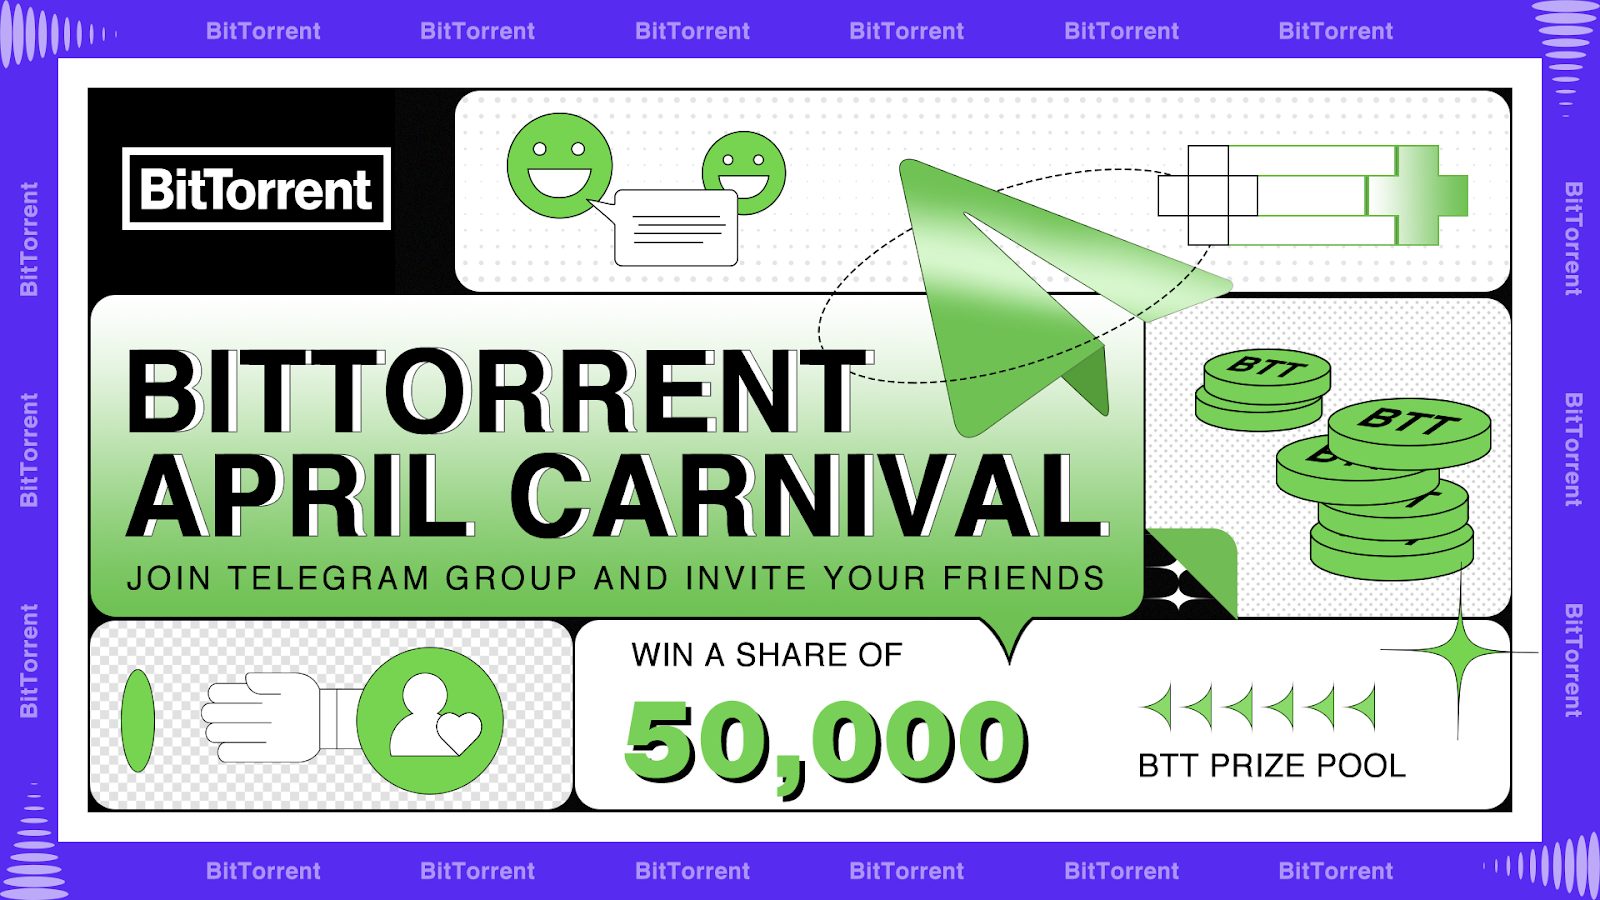 BitTorrent April Carnival